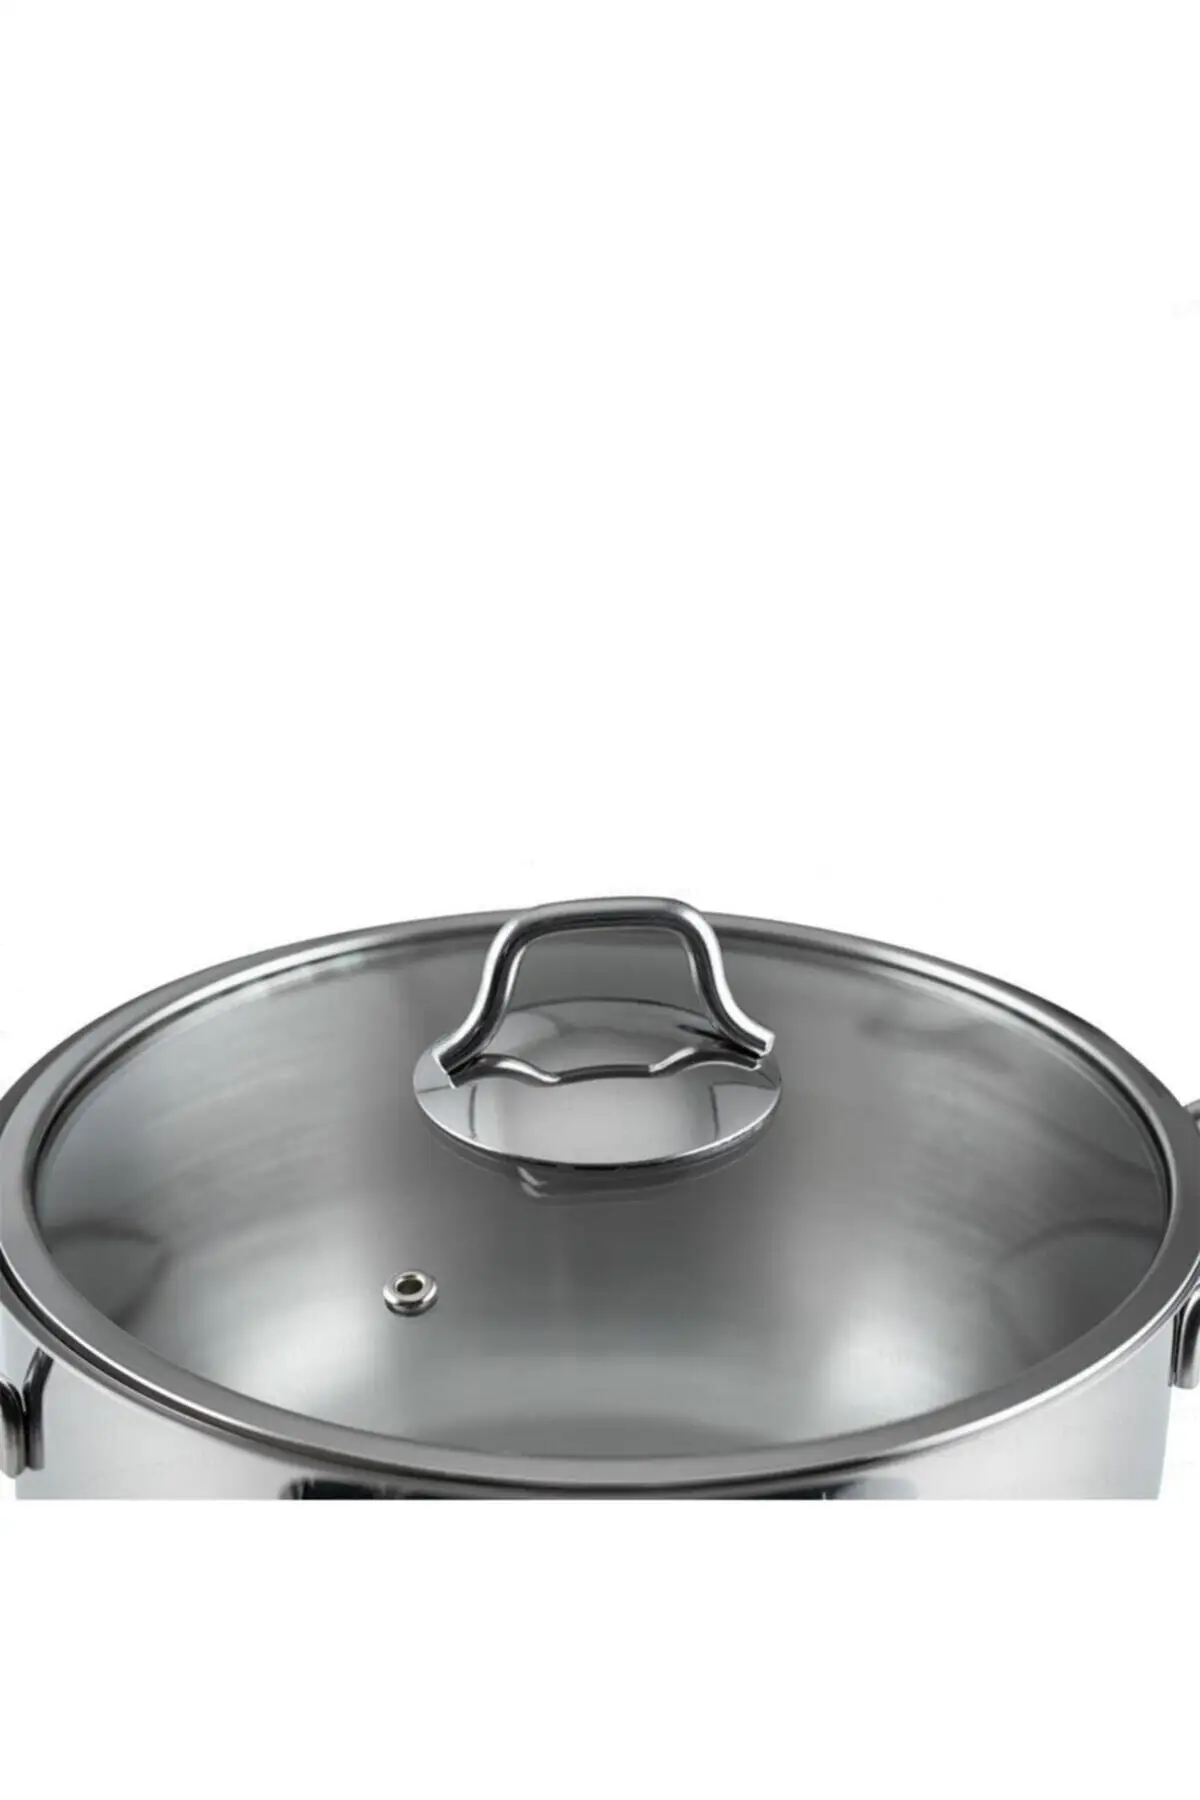 8PCS Stainless Steel Cookware Set 16 18 20 24cm Casserole Induction Pot All  Stovetop - AliExpress